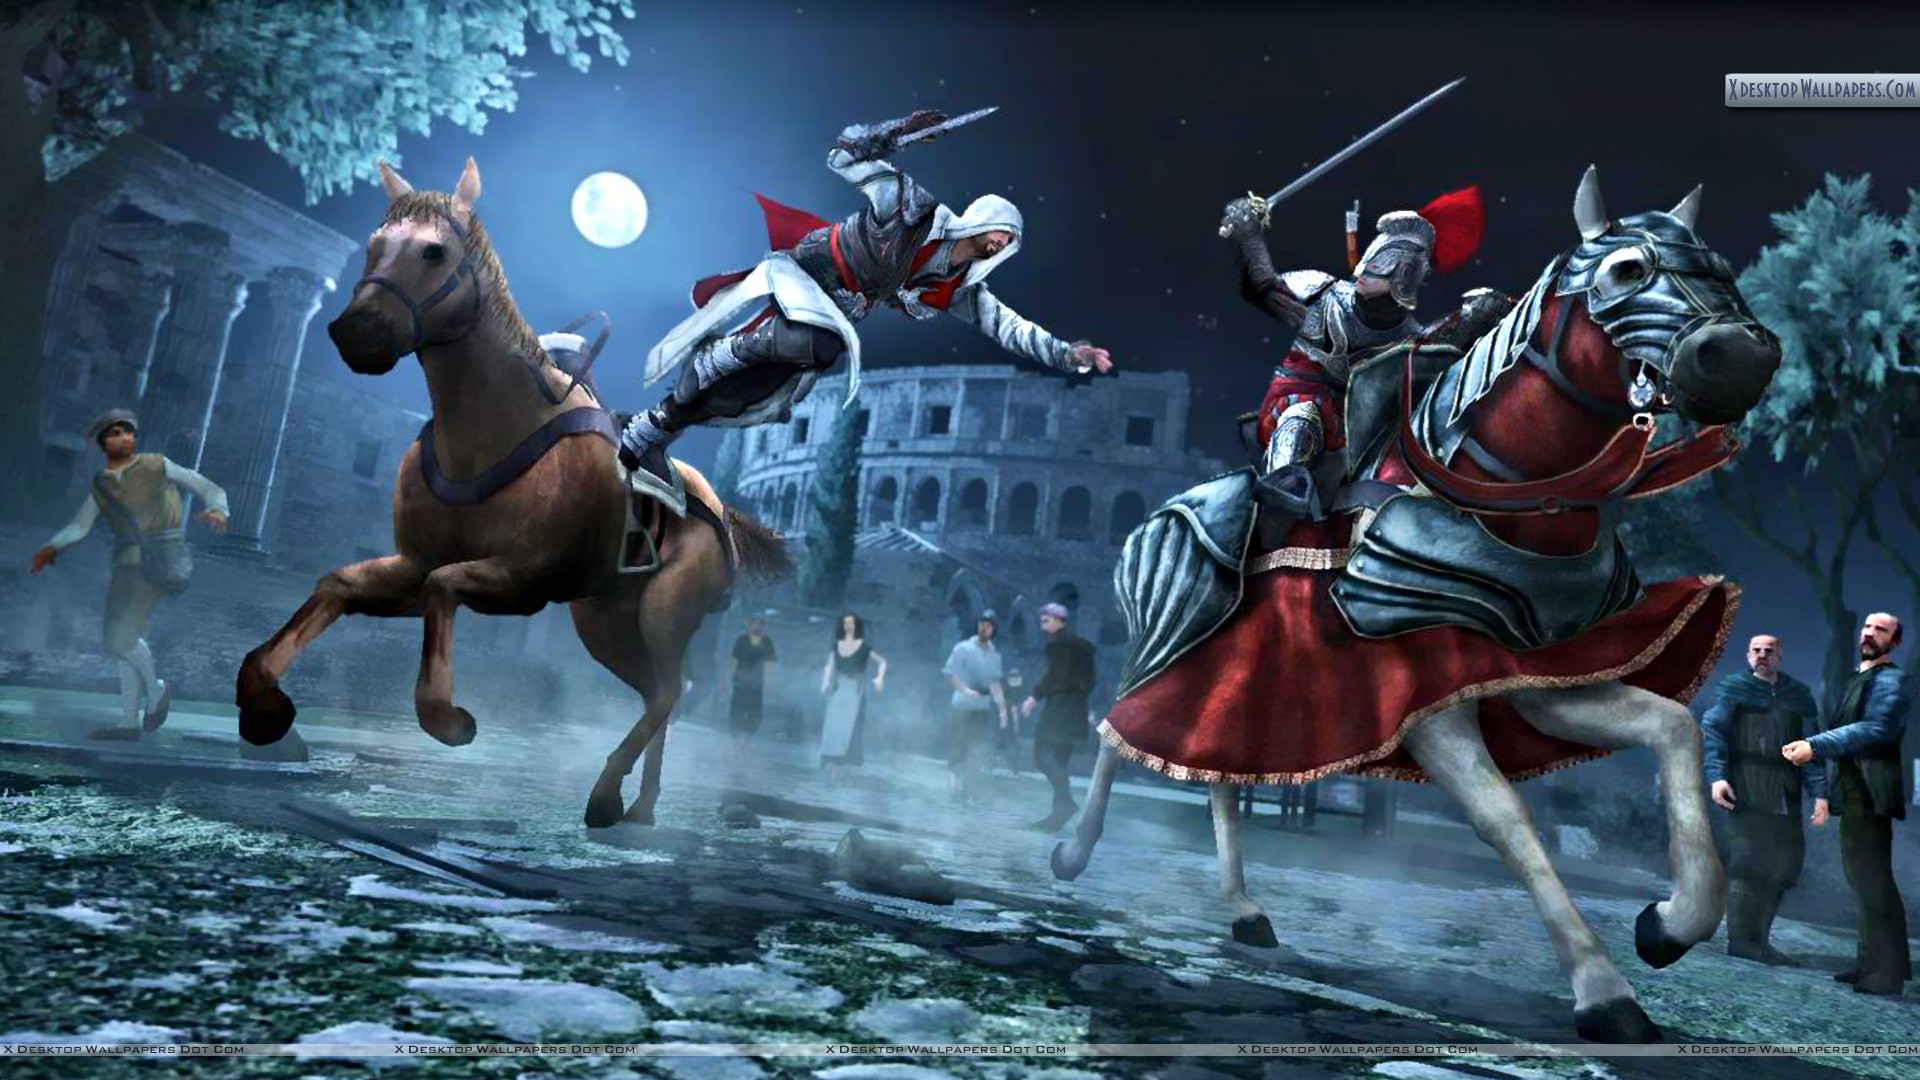 Assassins Creed Brotherhood Wallpaper Photos Image In HD